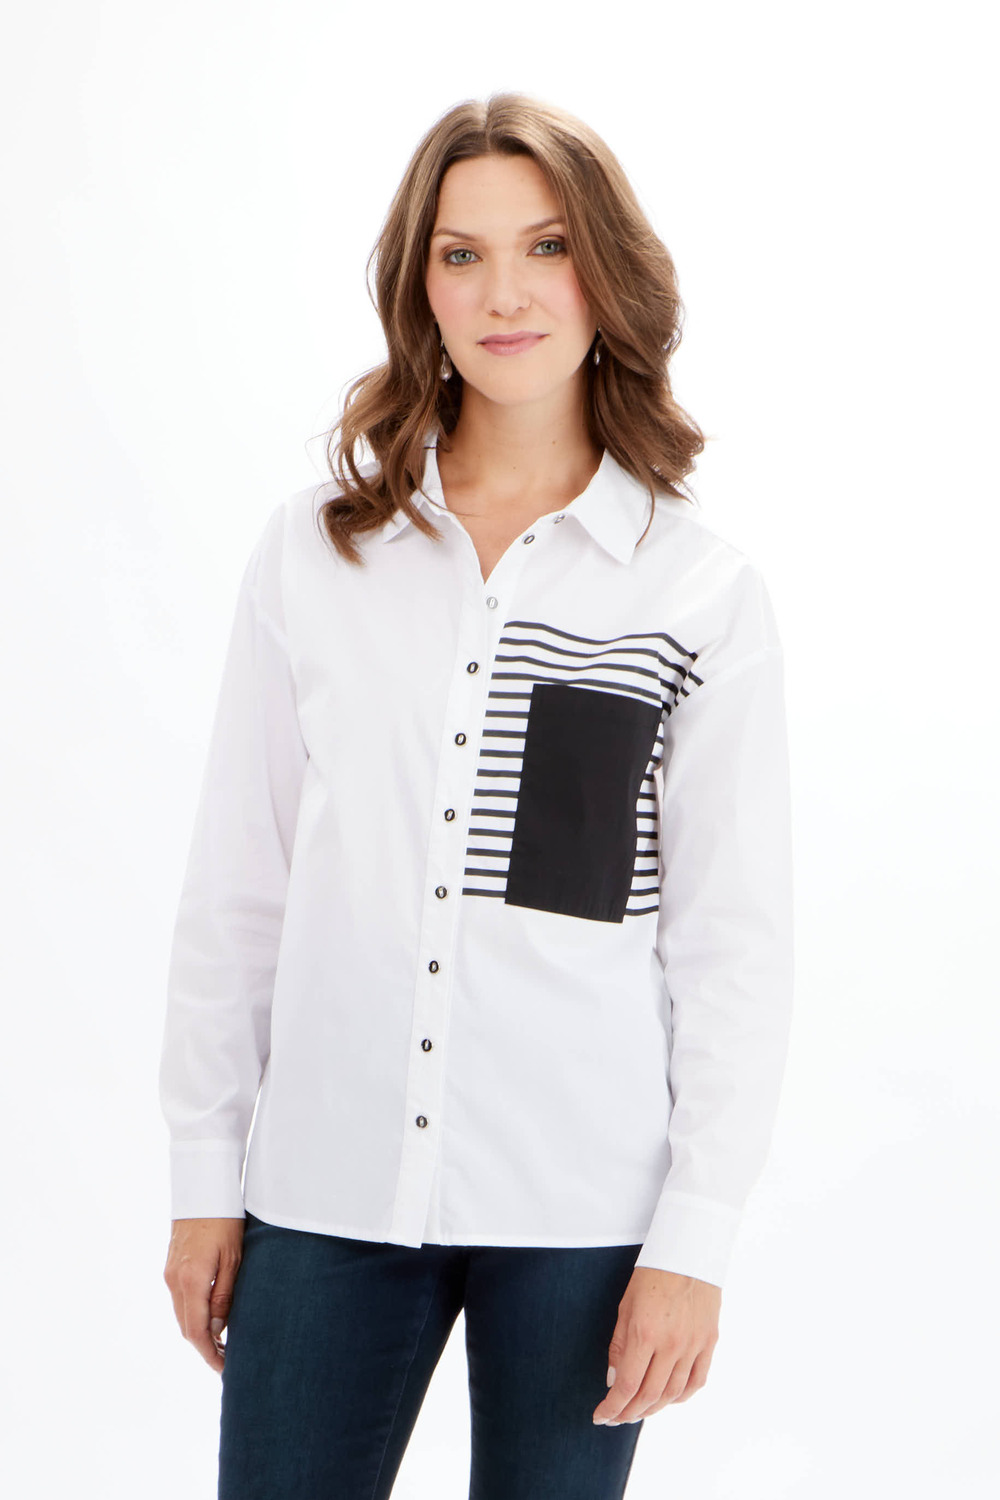 Striped Pocket Blouse Style 711-12. White